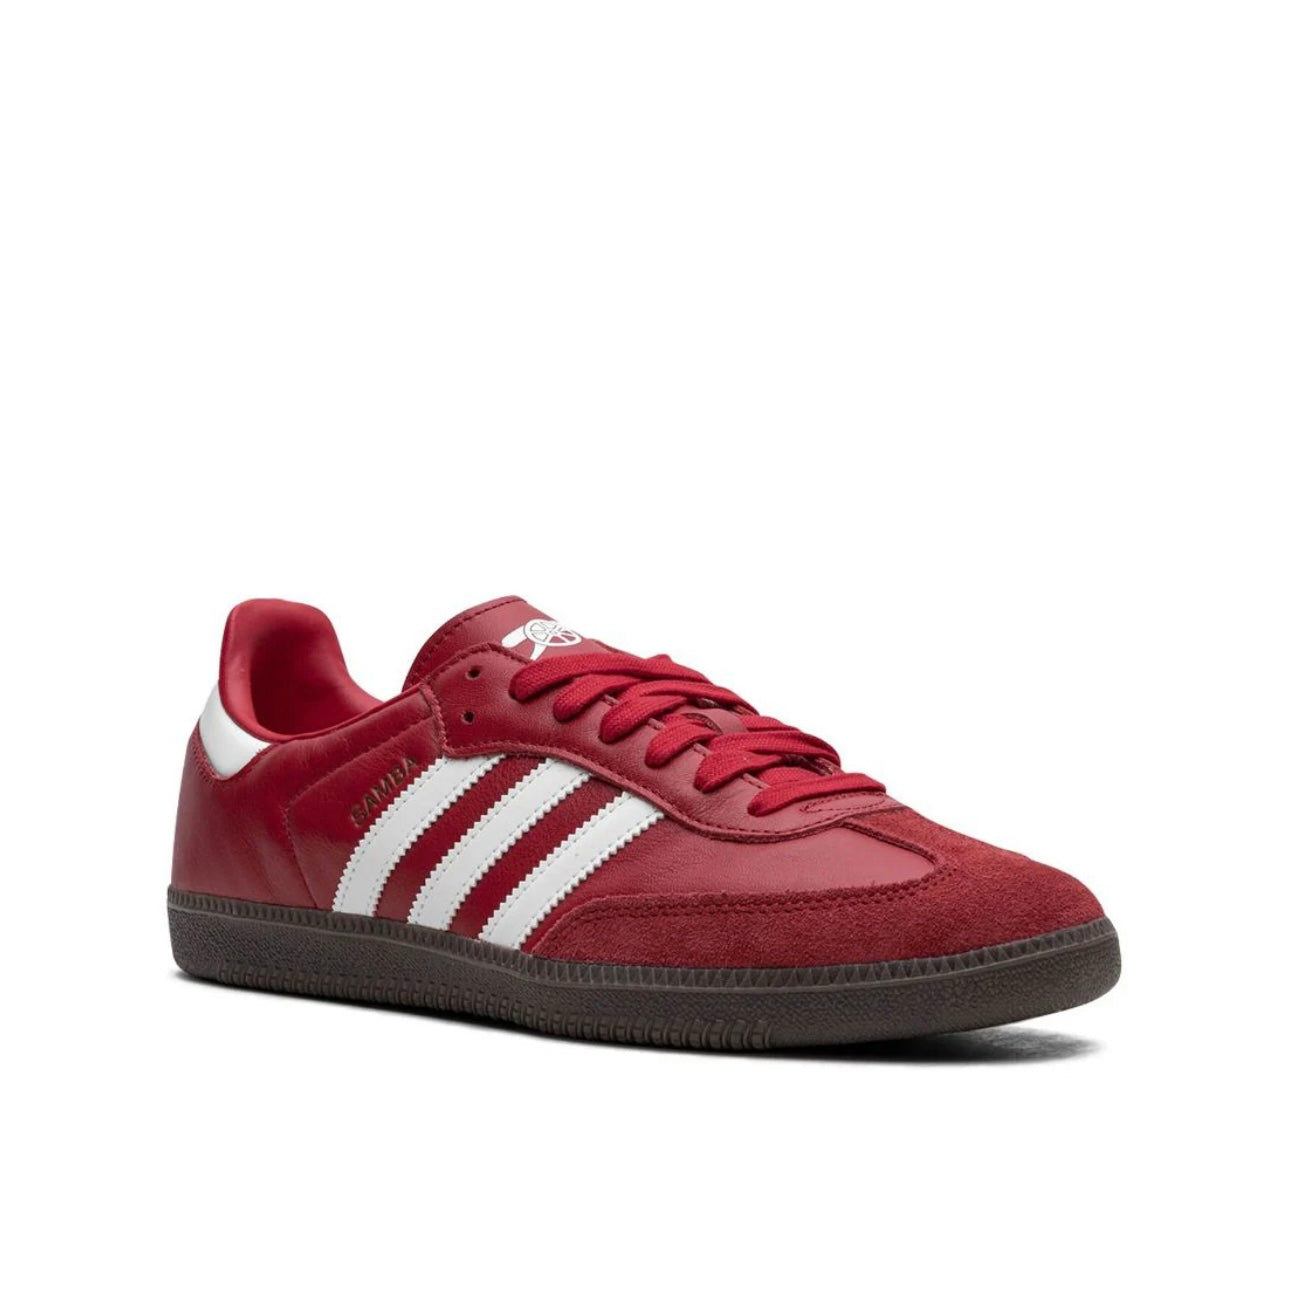 Adidas Samba red